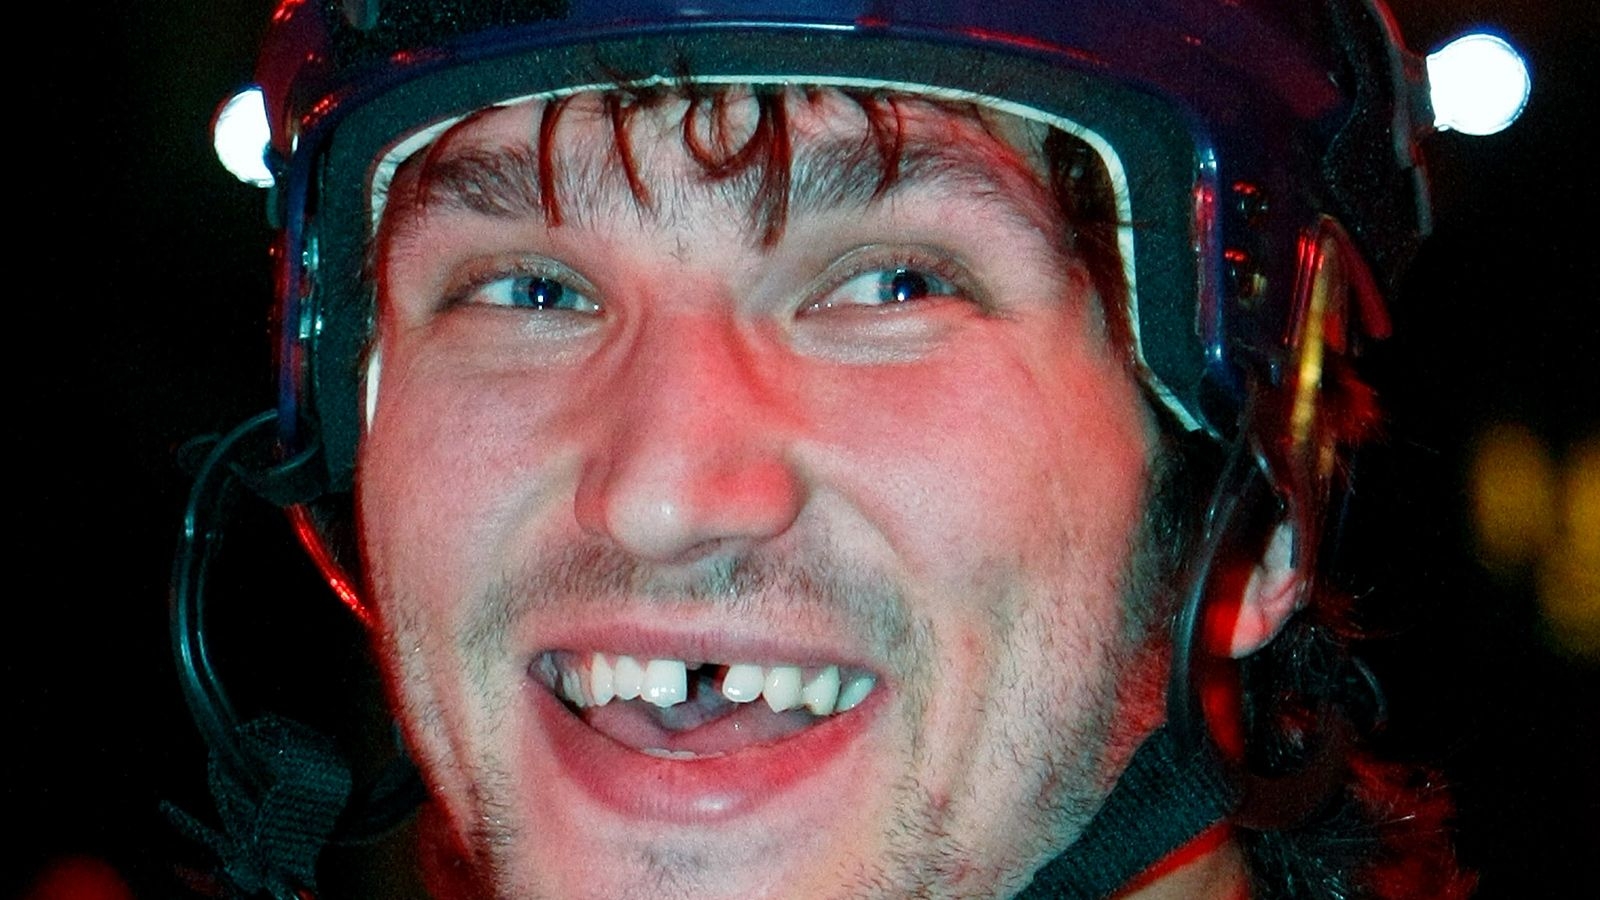 Овечкин без зуба. Хоккеист Овечкин улыбка. Беззубый хоккеист Овечкин.